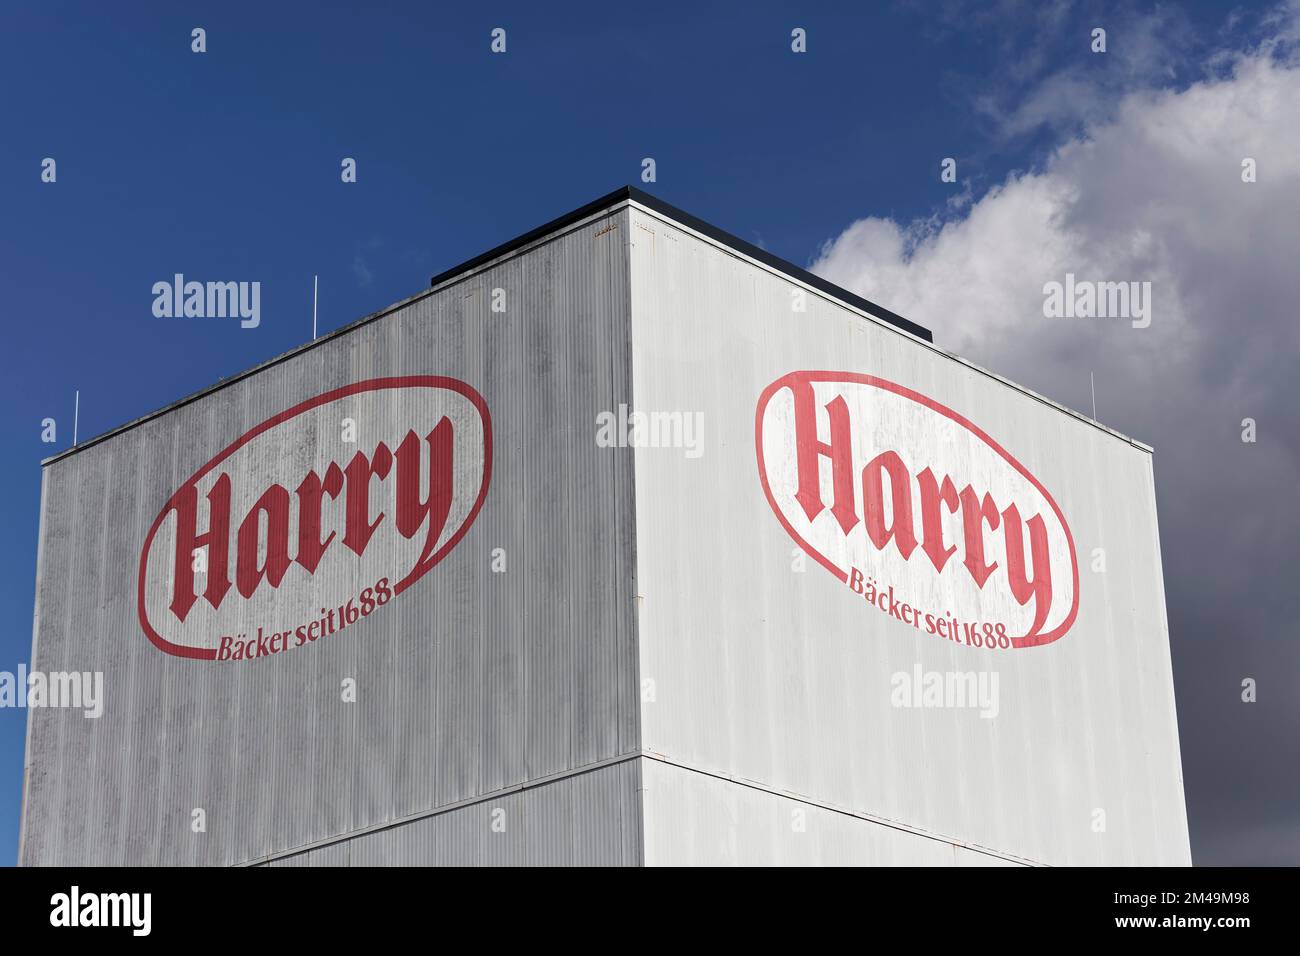 https://c8.alamy.com/comp/2M49M98/harry-brot-logo-on-the-production-site-wholesale-bakery-ratingen-north-rhine-westphalia-germany-2M49M98.jpg